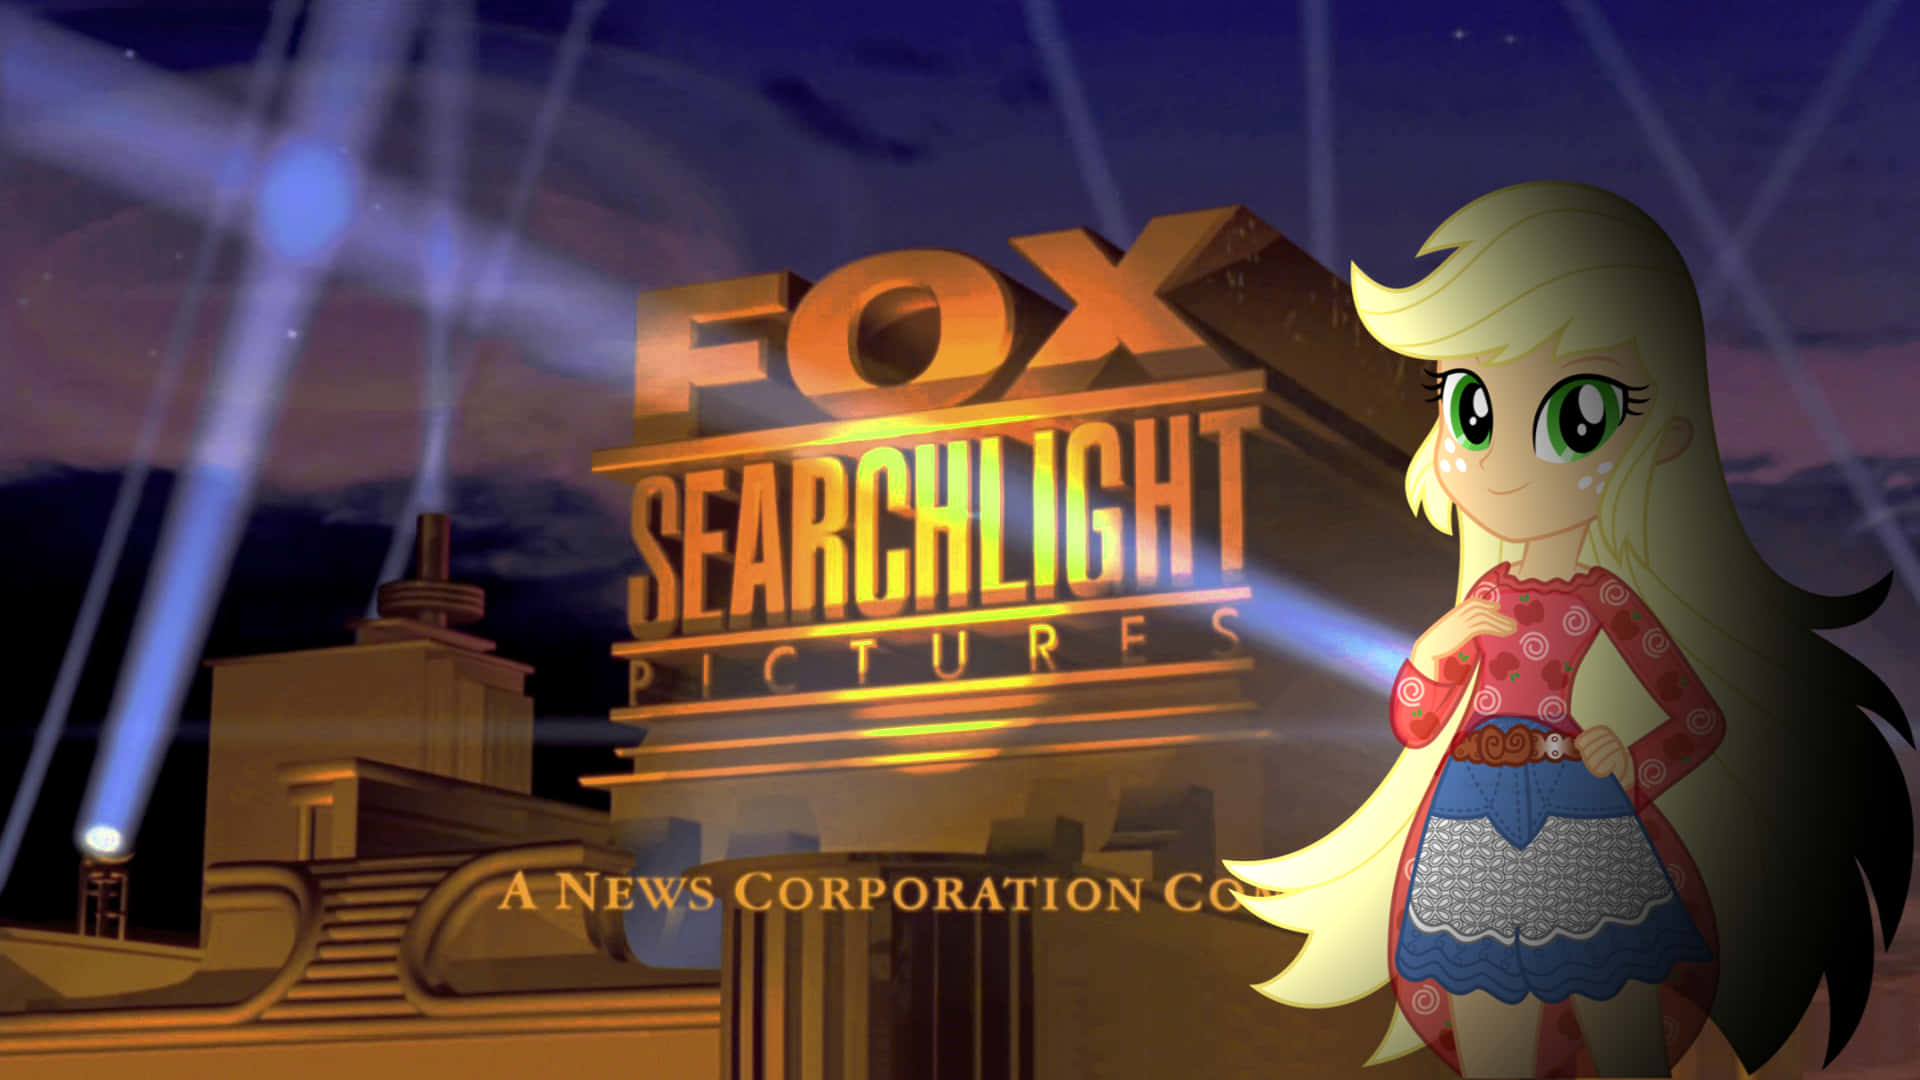 Applejack My Little Pony Fox Searchlight Picture